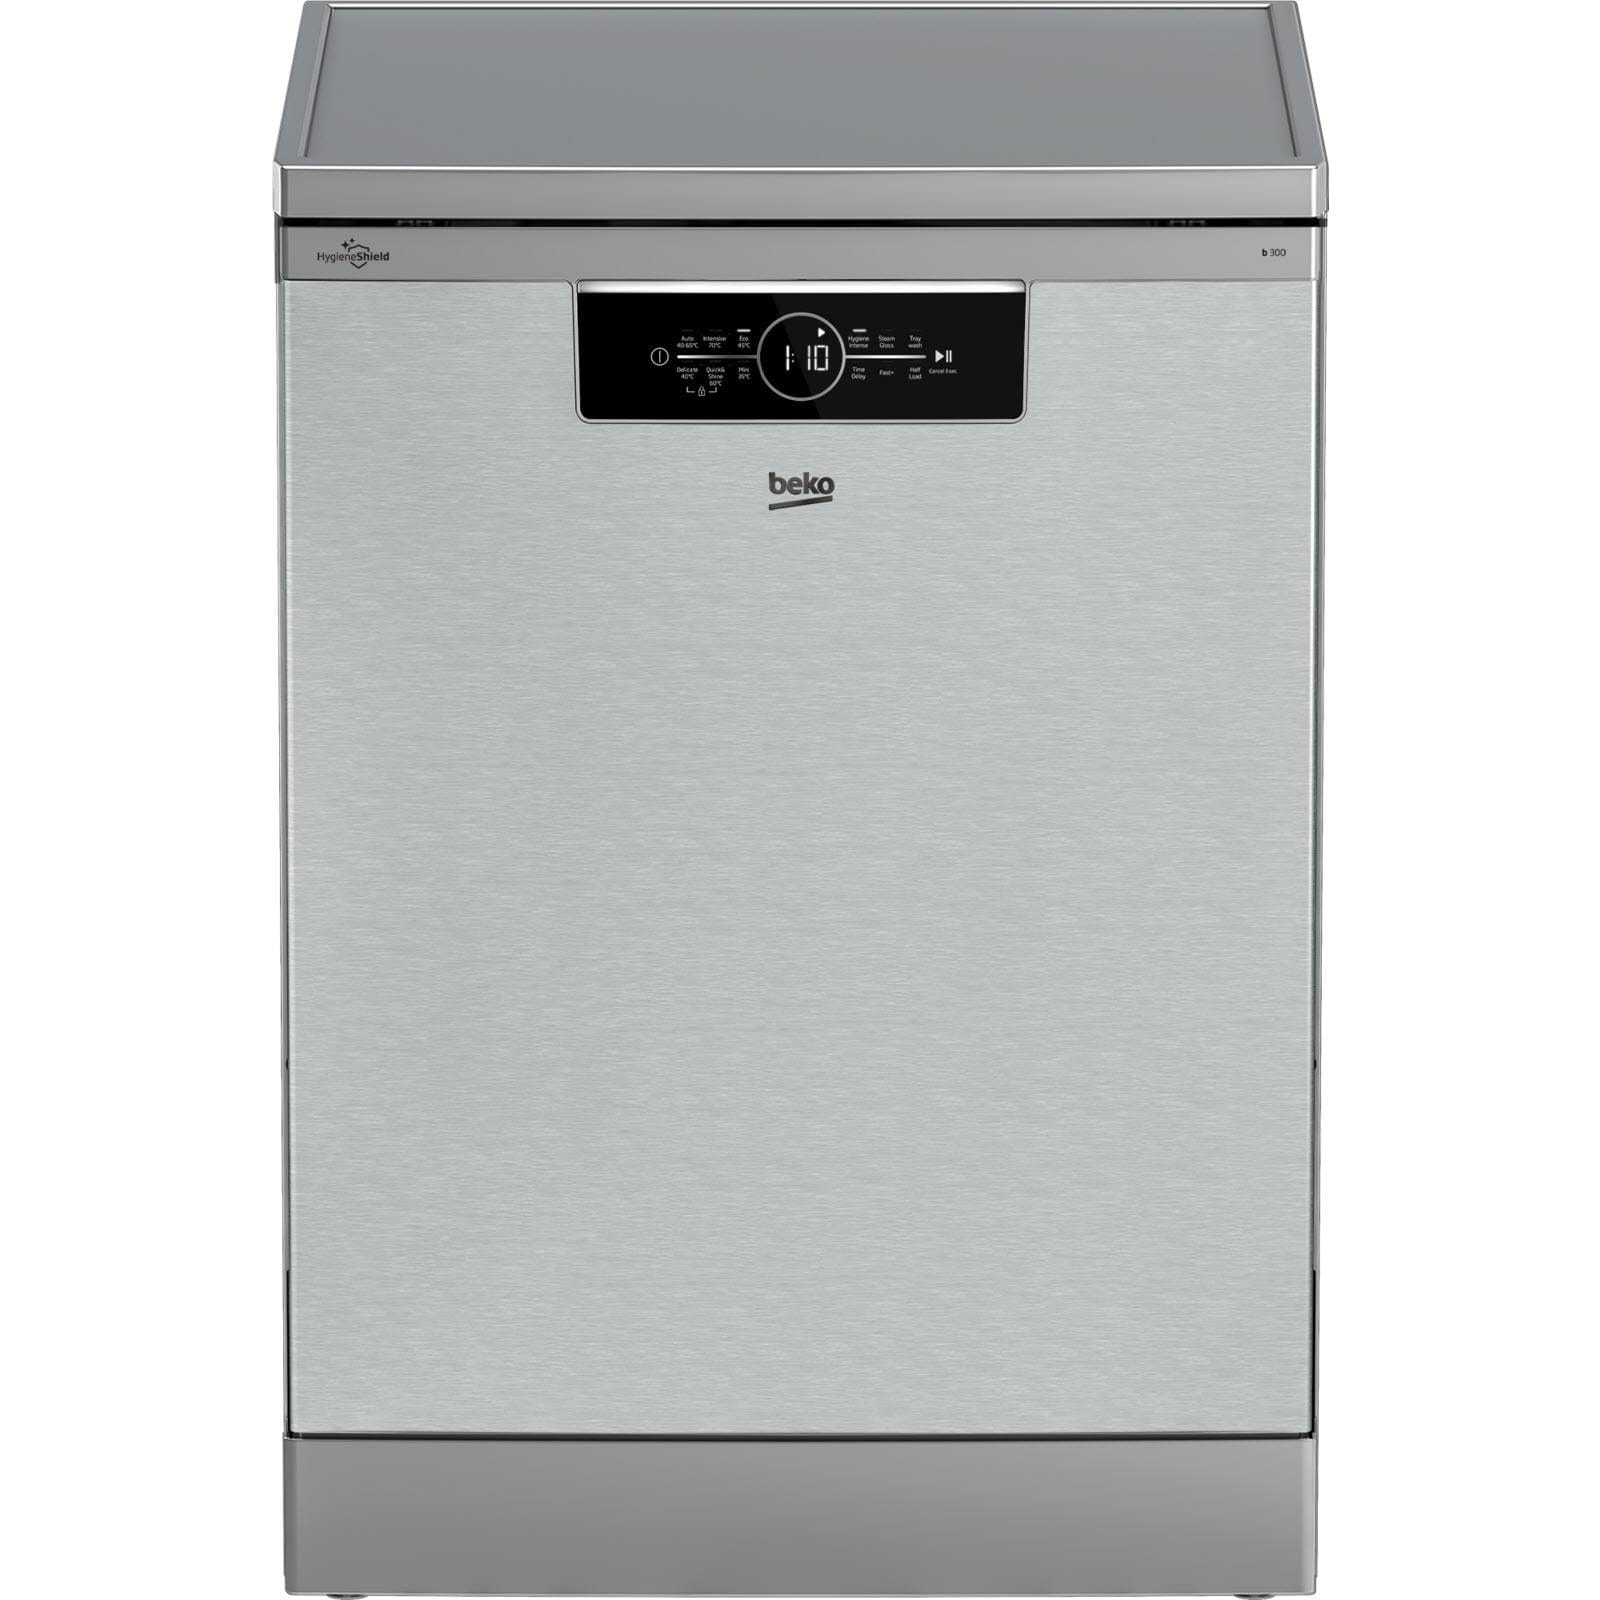 Beko 14 Place Setting Freestanding Dishwasher (Stainless)